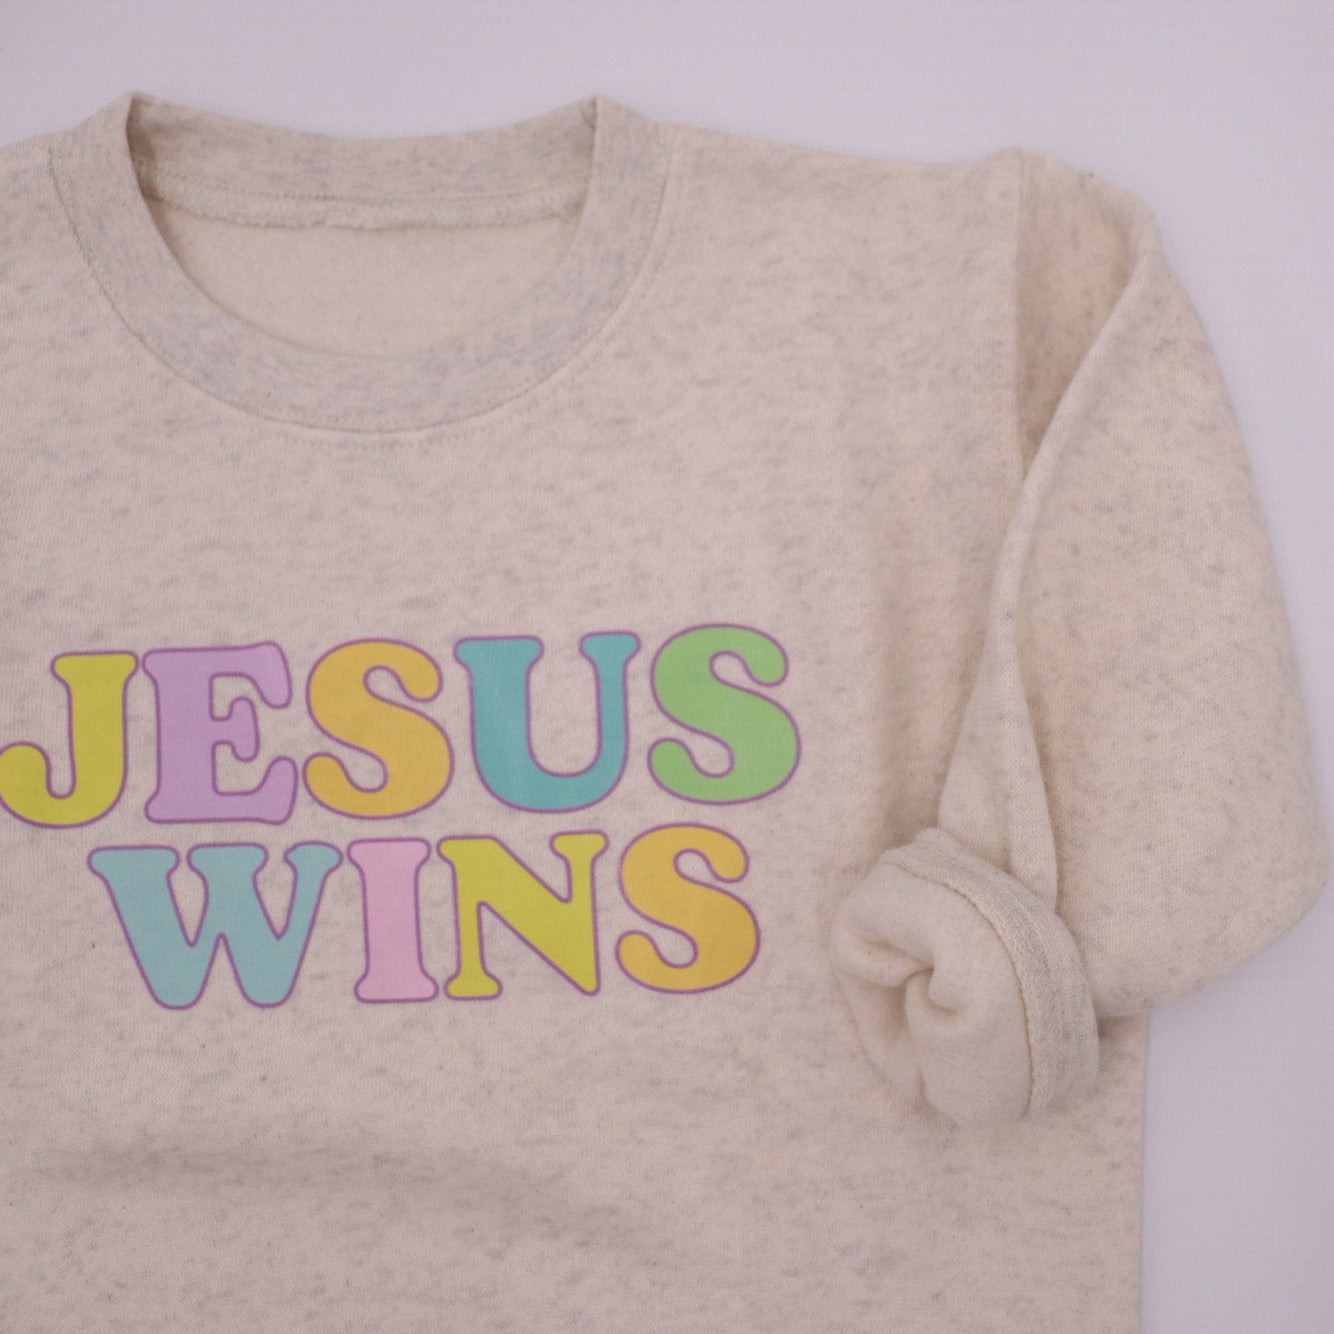 Jesus Wins - Toddler Sweatshirt